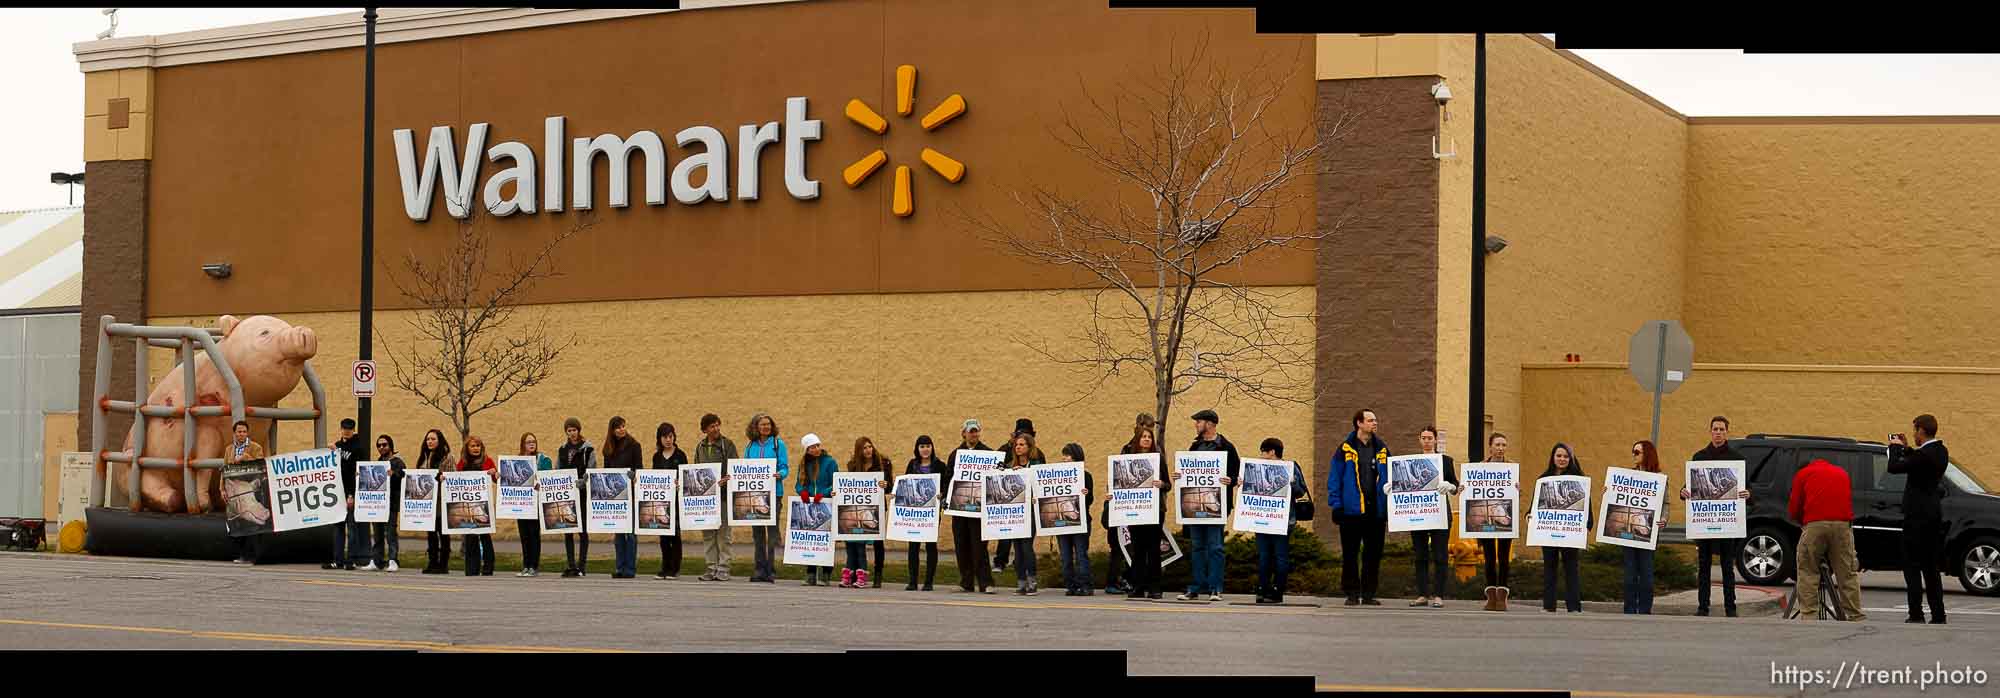 Walmart Protest